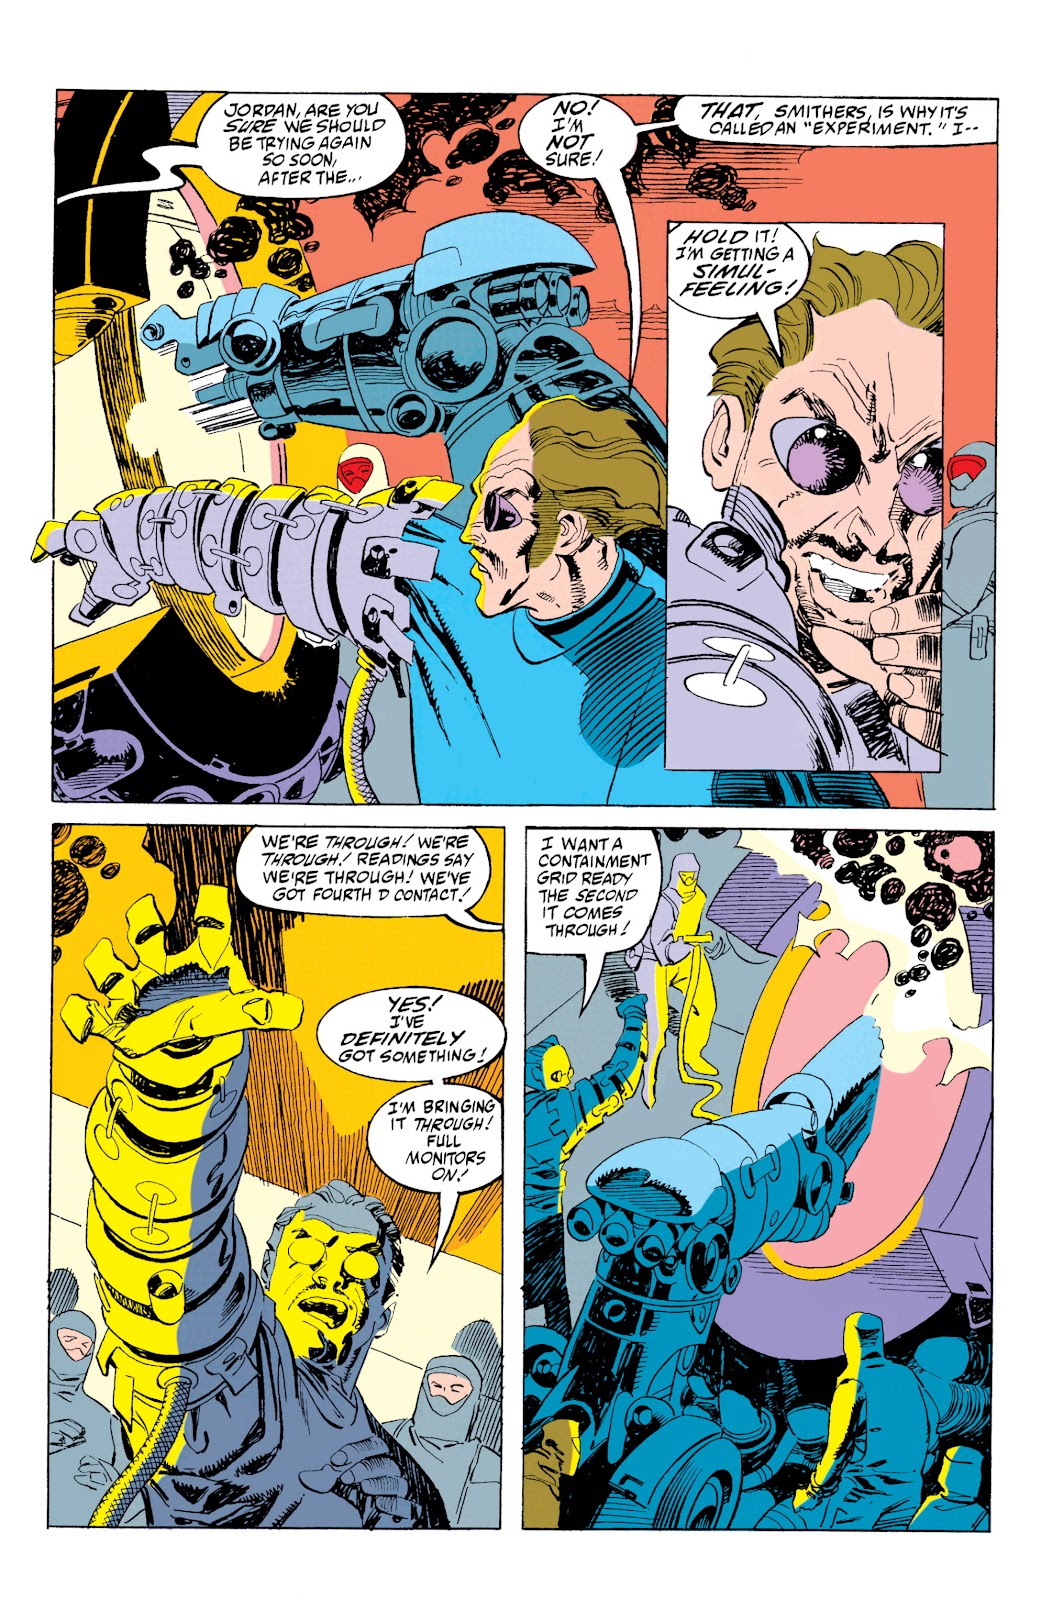 Spider-Man 2099 (1992) issue 12 - Page 18